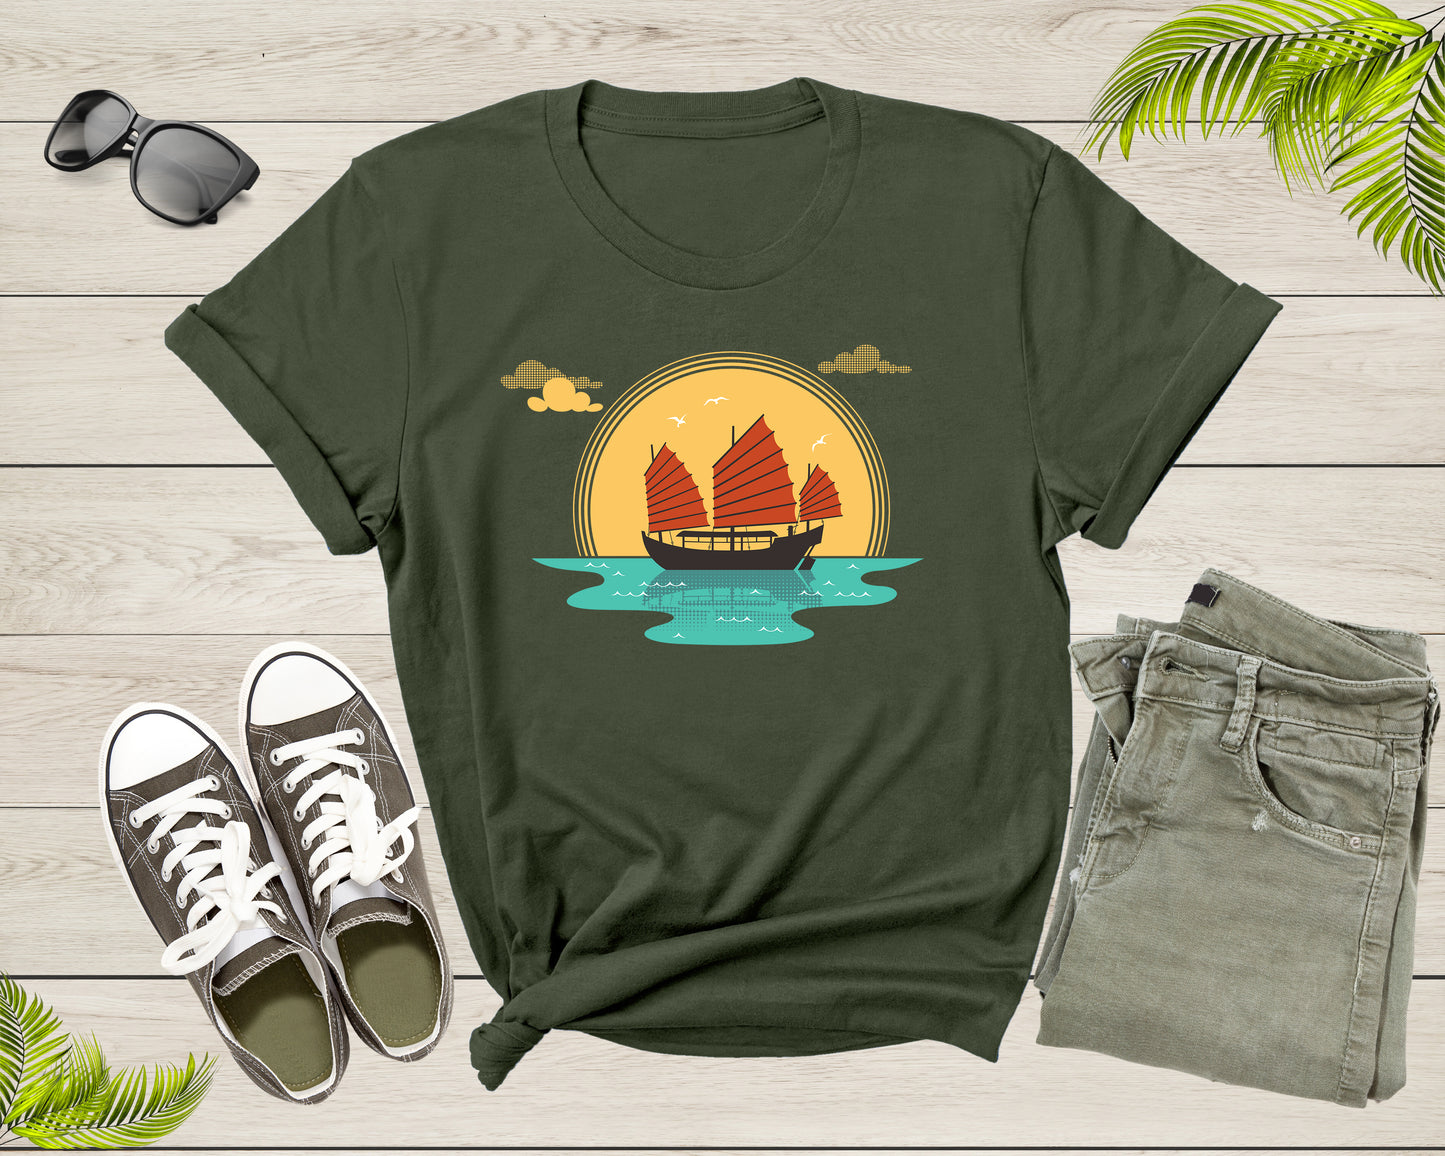 Cool Boat Sailboat Ship at Sunset Sailing in the Sea Ocean T-Shirt Sailor Boat Shirt for Men Women Kids Boys Girls Teens Graphic Gift Tshirt